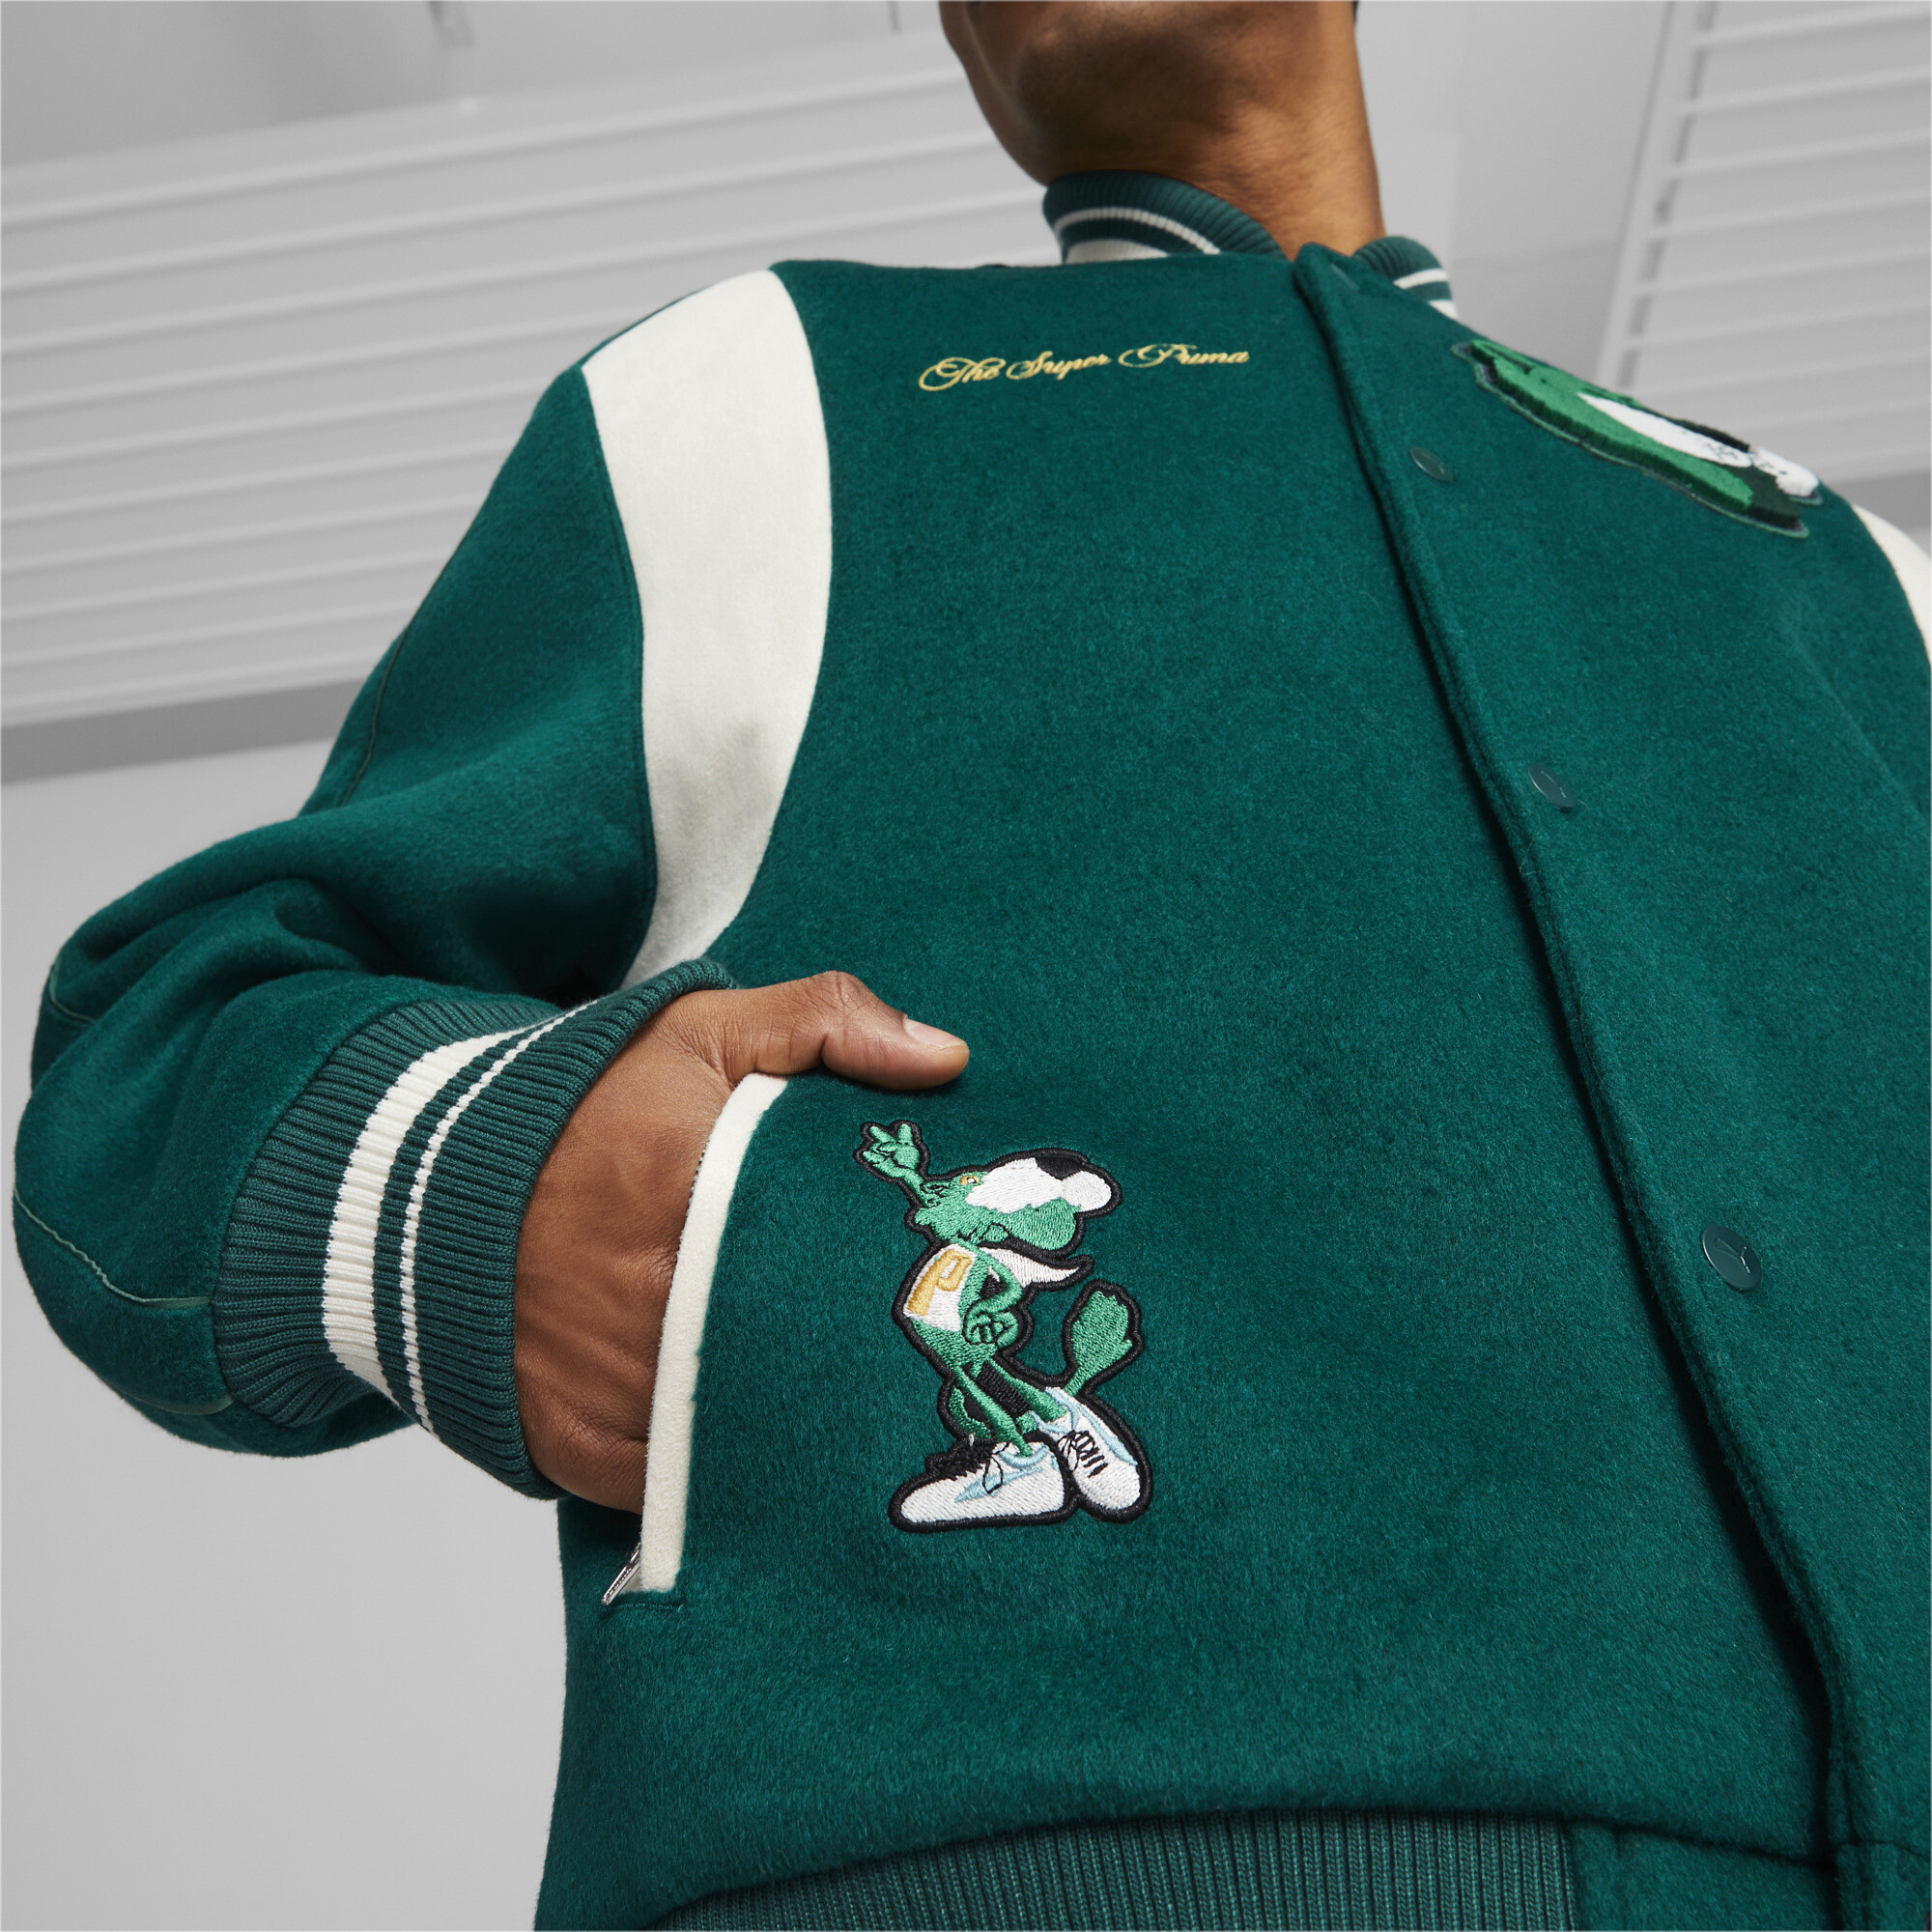 Men's PUMA The Mascot T7 College Jacket Men In Green, Size XS